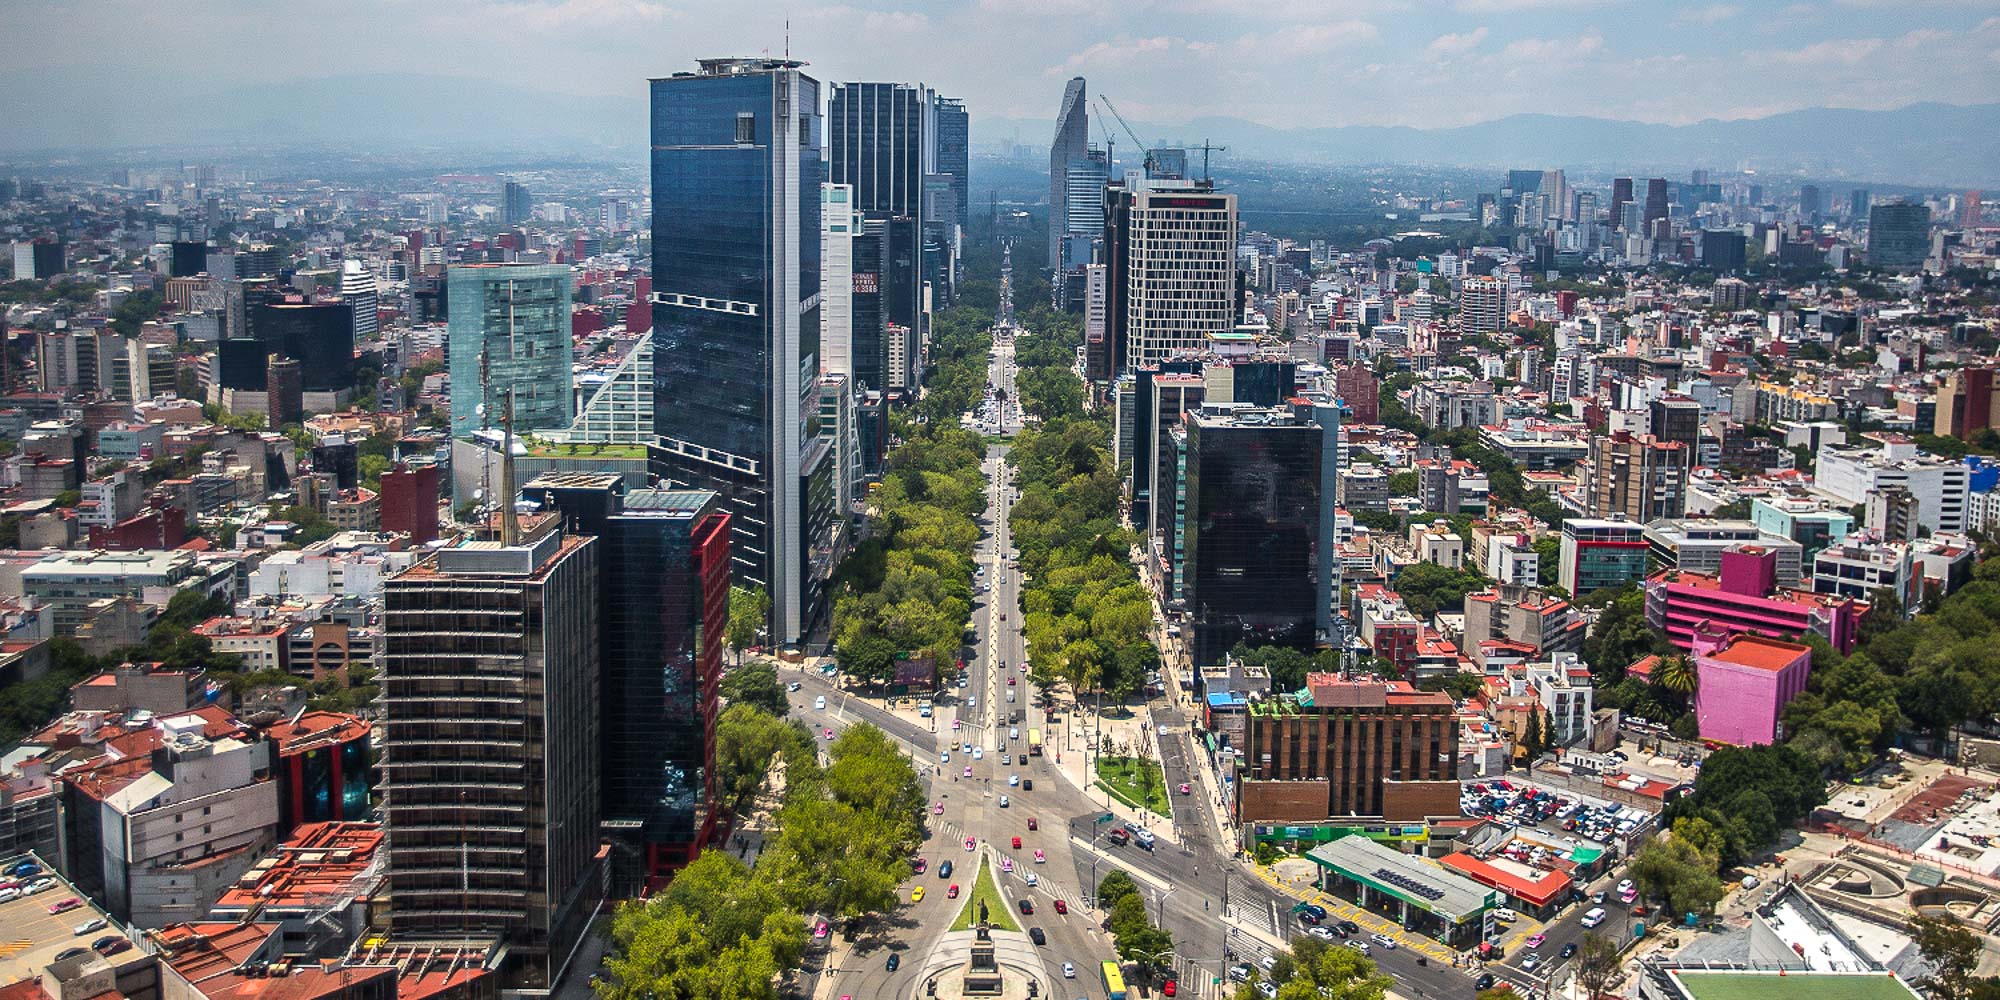 View of JuÃ¡rez neighborhood in Mexico City